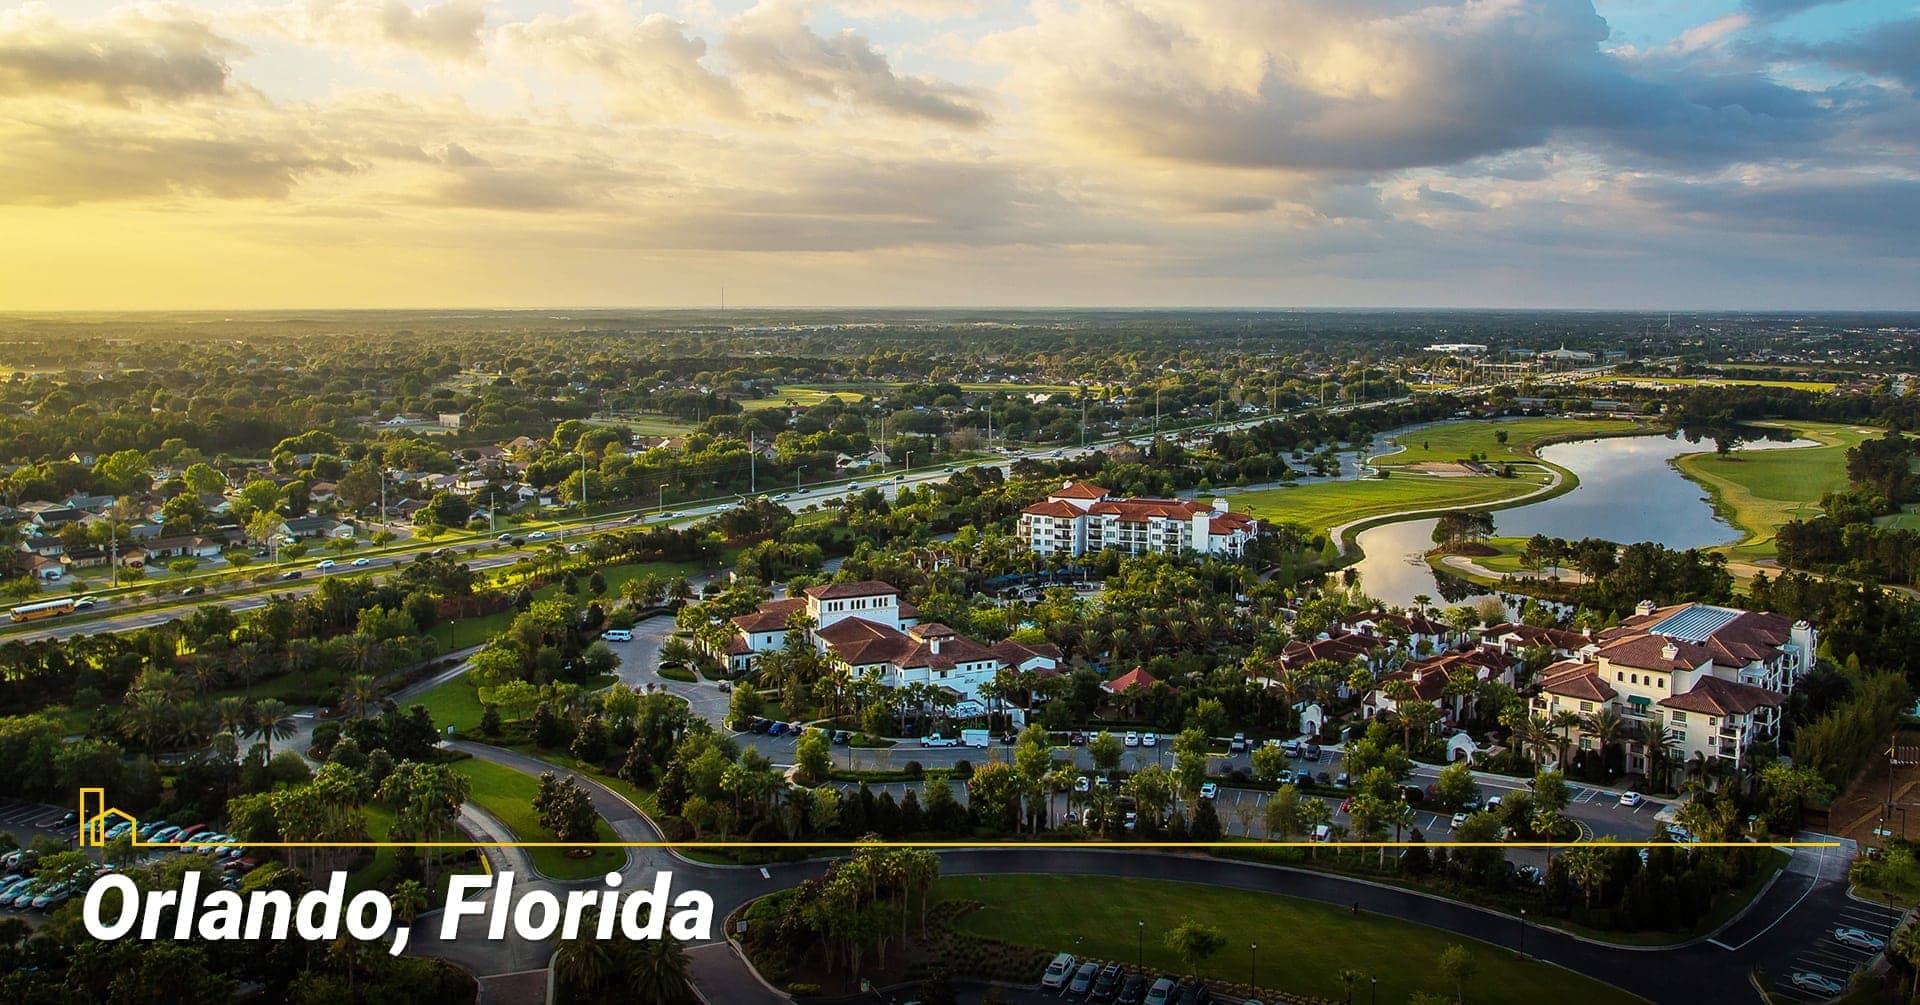 Orlando, Florida an affordable city to retire